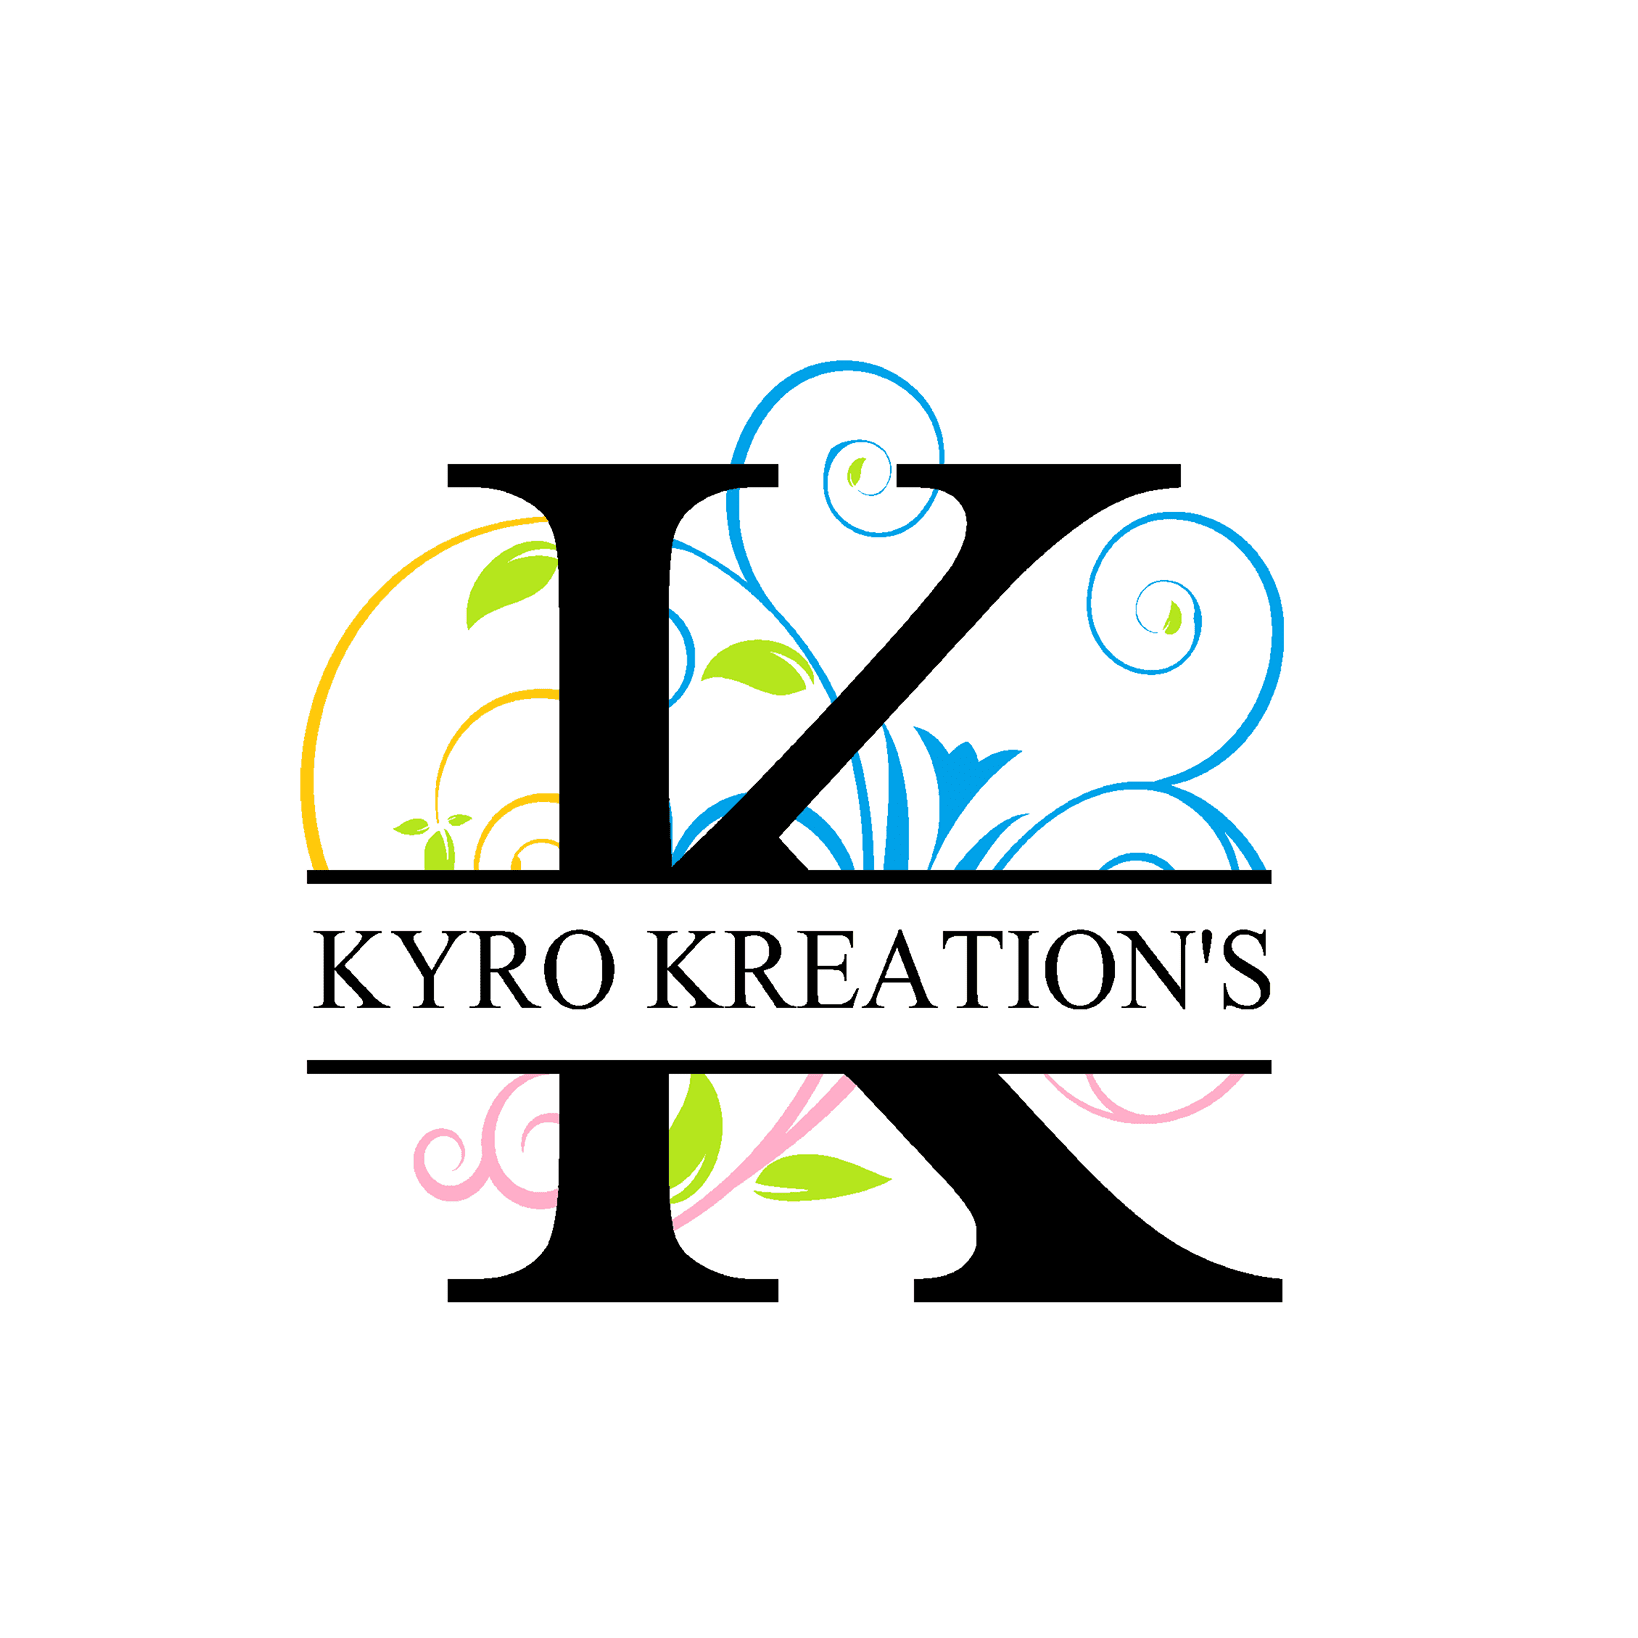 Kyro Kreation's